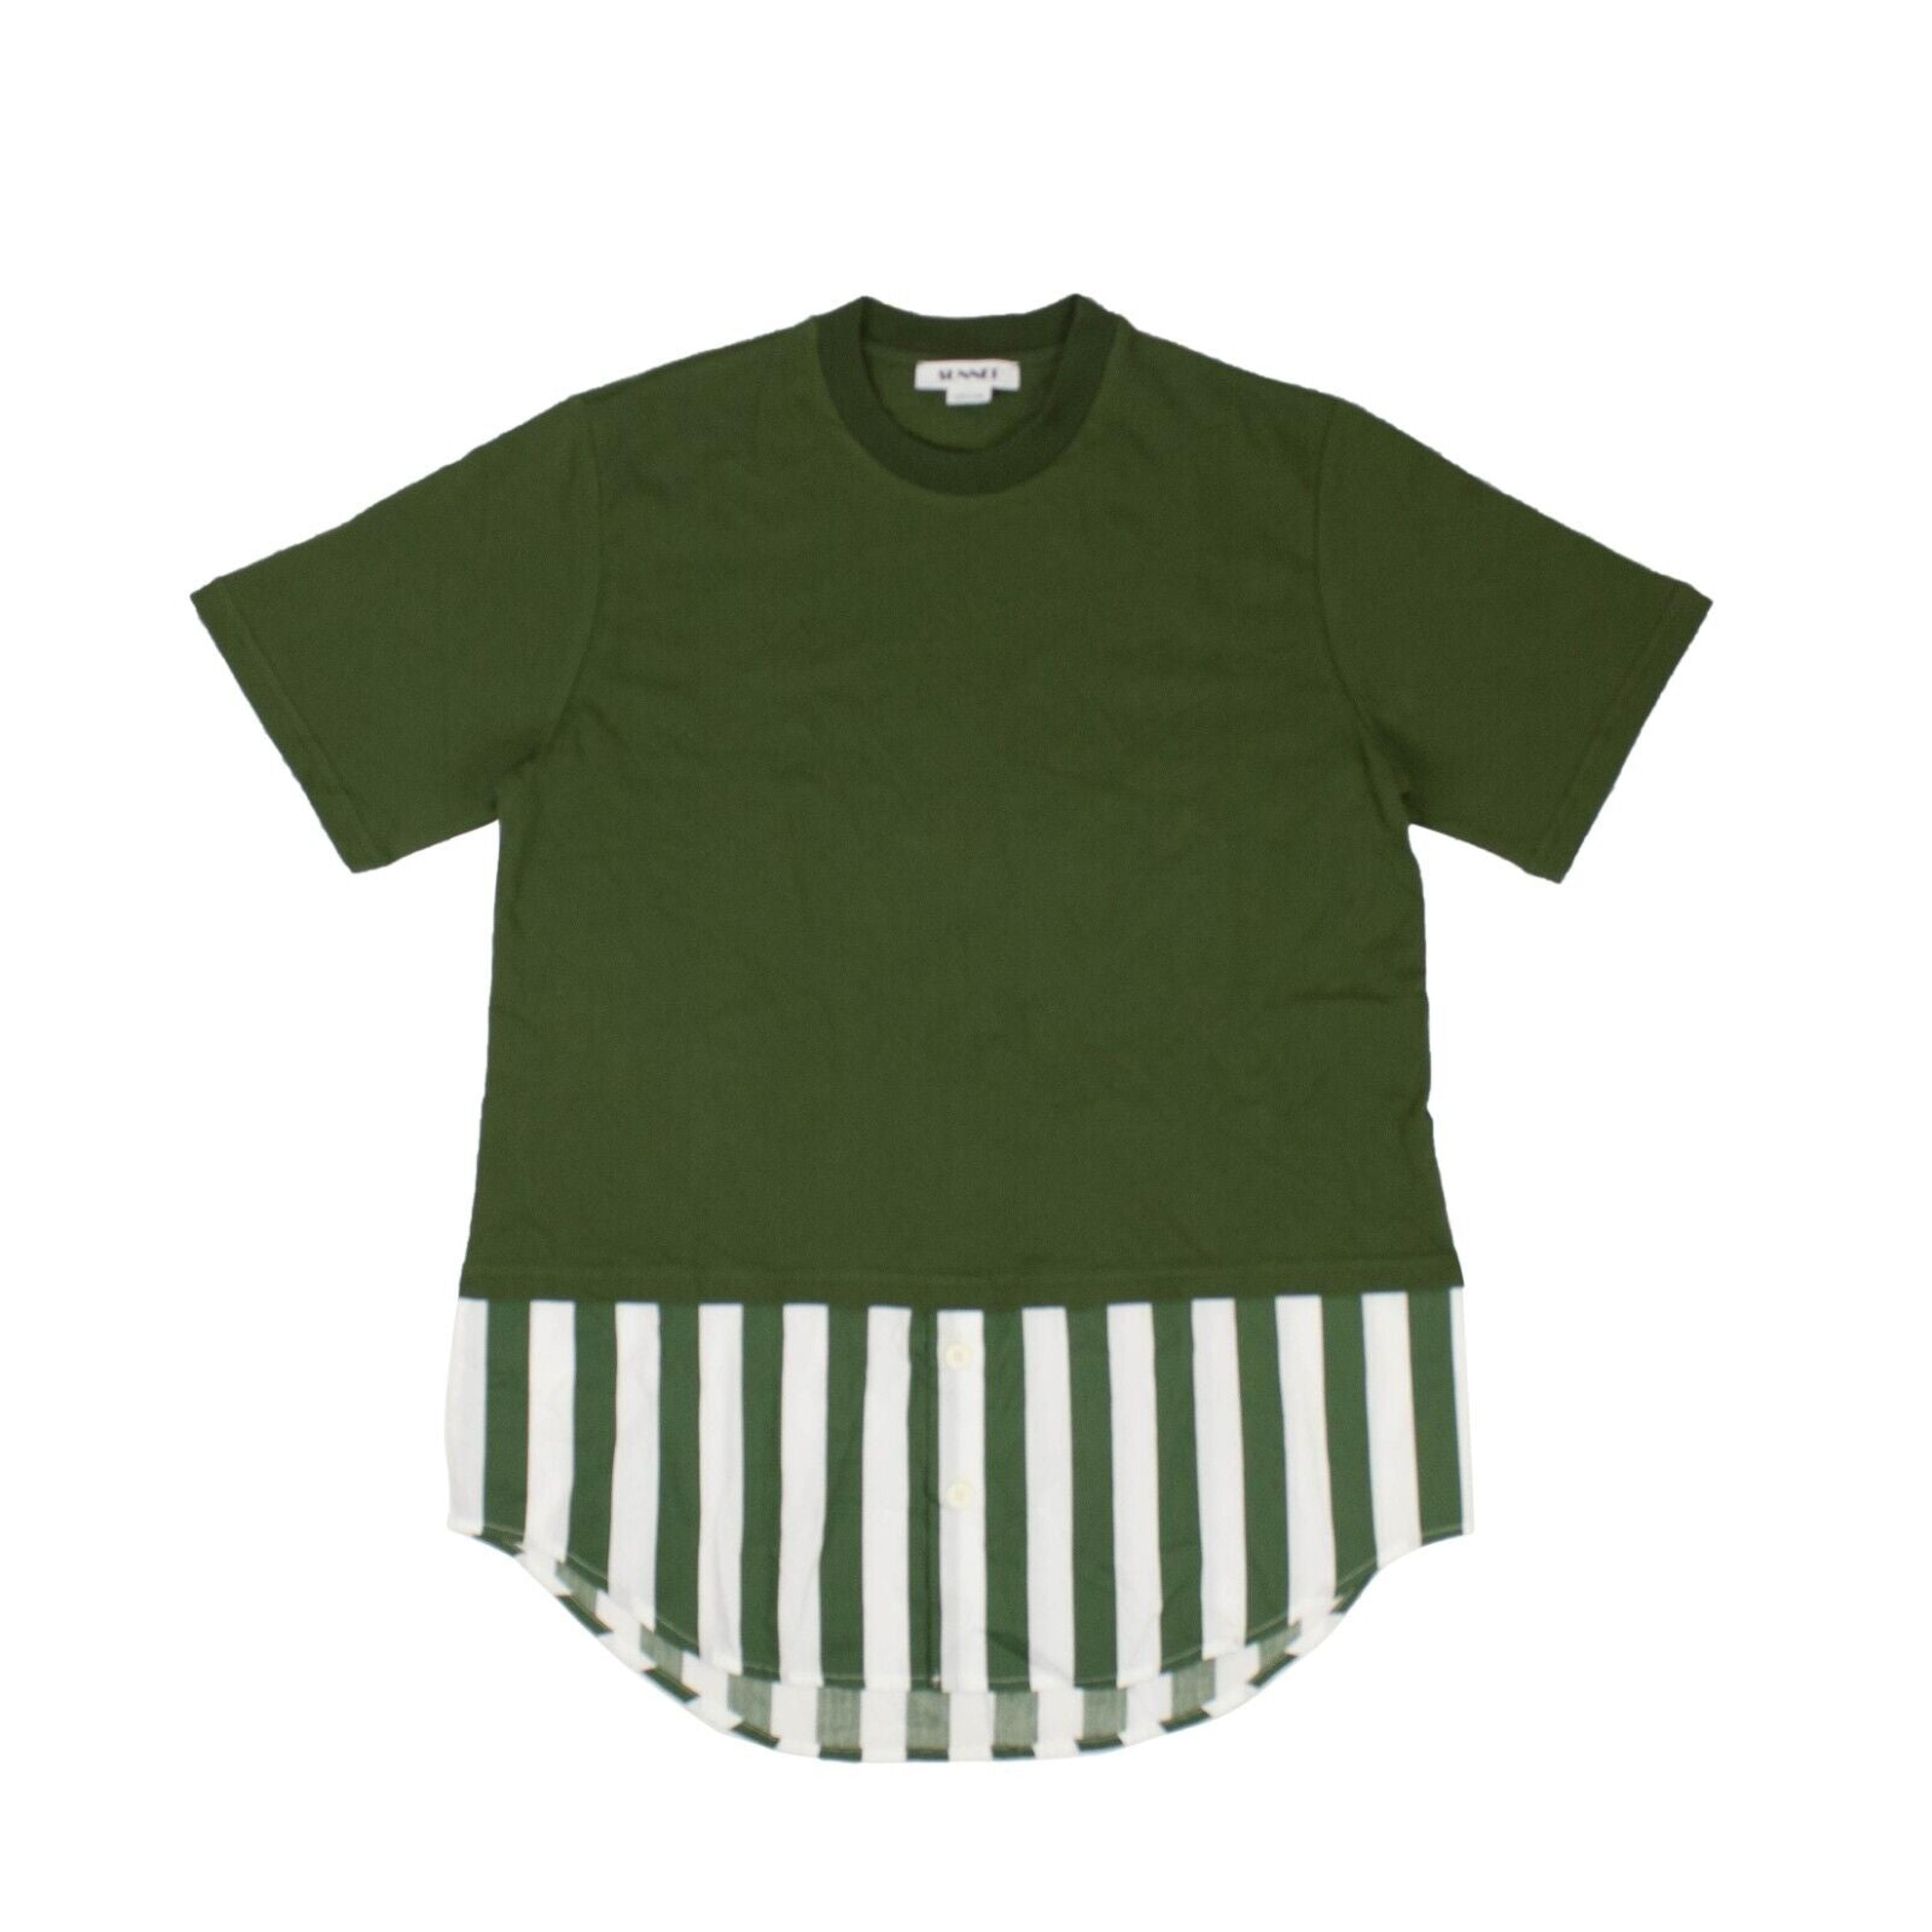 Alternate View 4 of Men'S T-Shirts - Green/White